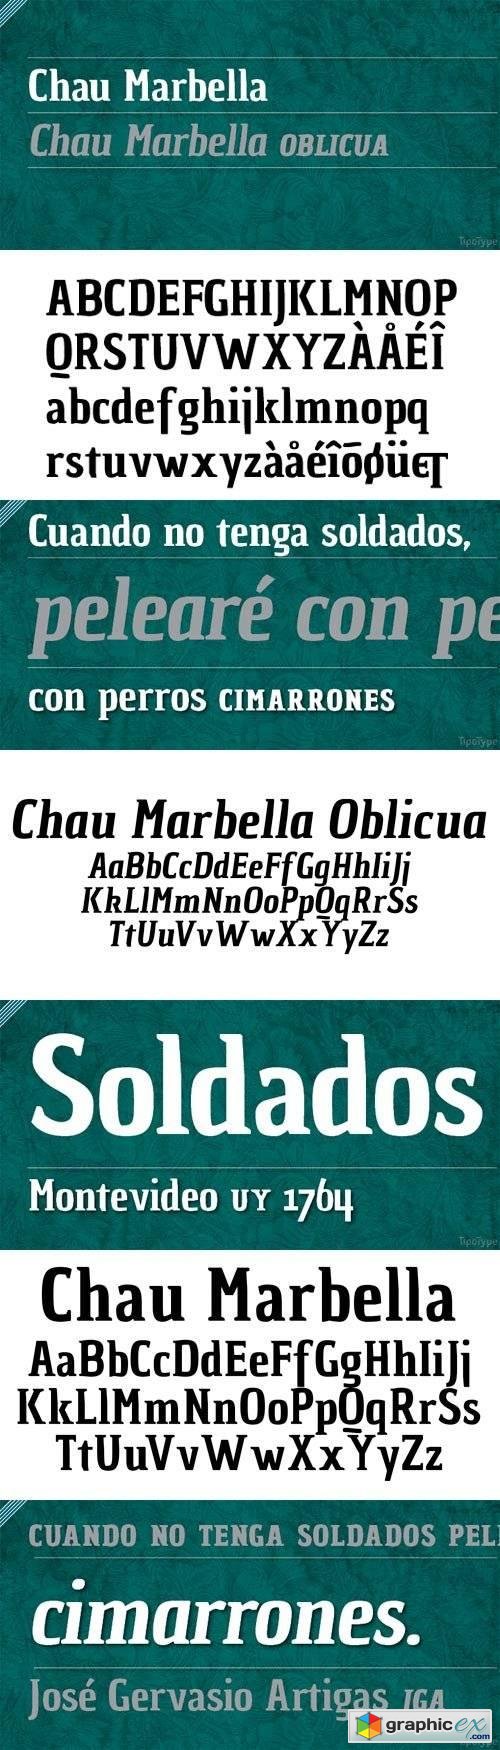 Chau Marbella Font Family - 2 Fonts for $20